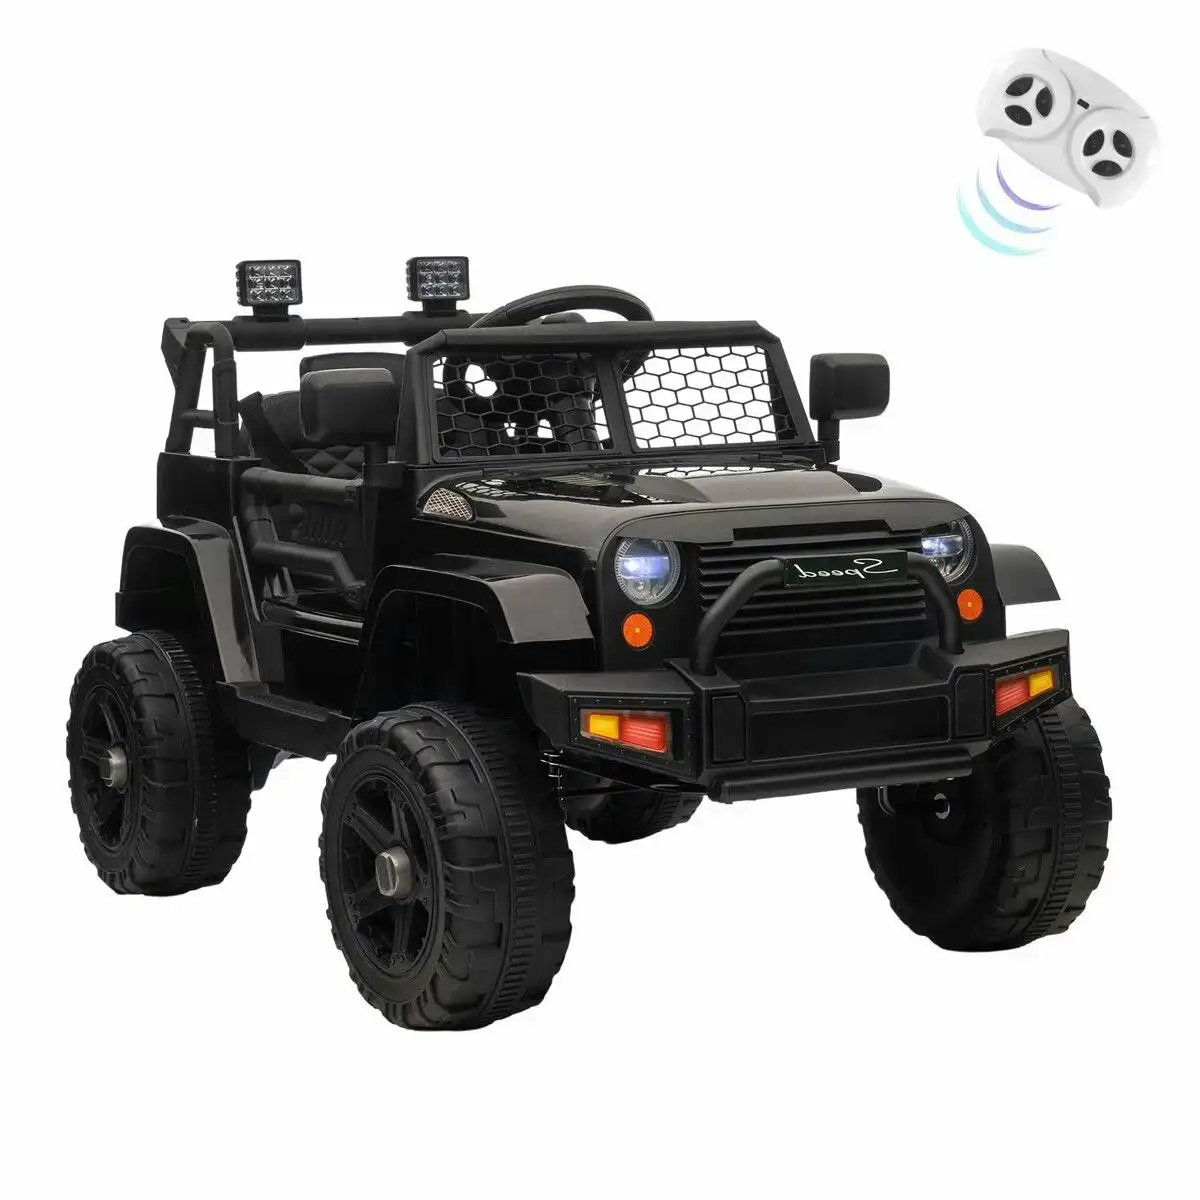 Ausway Kids Electric Car Parental Remote Control Ride On Truck Toy Jeep 12V Vehicle Spring Suspension LED AUX Port Black